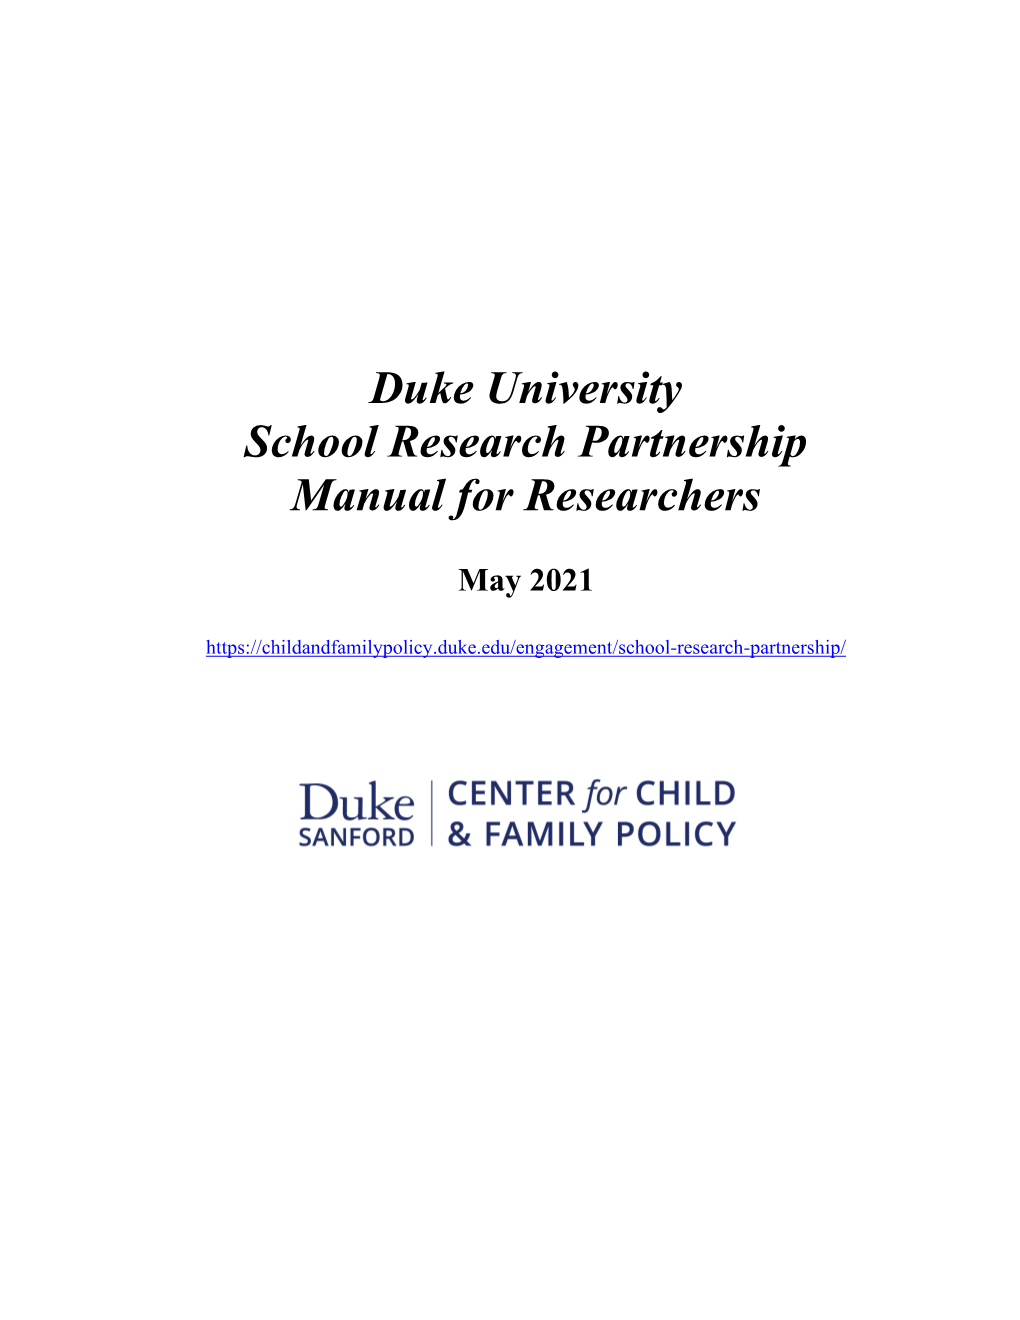 Duke University School Research Partnership Manual for Researchers